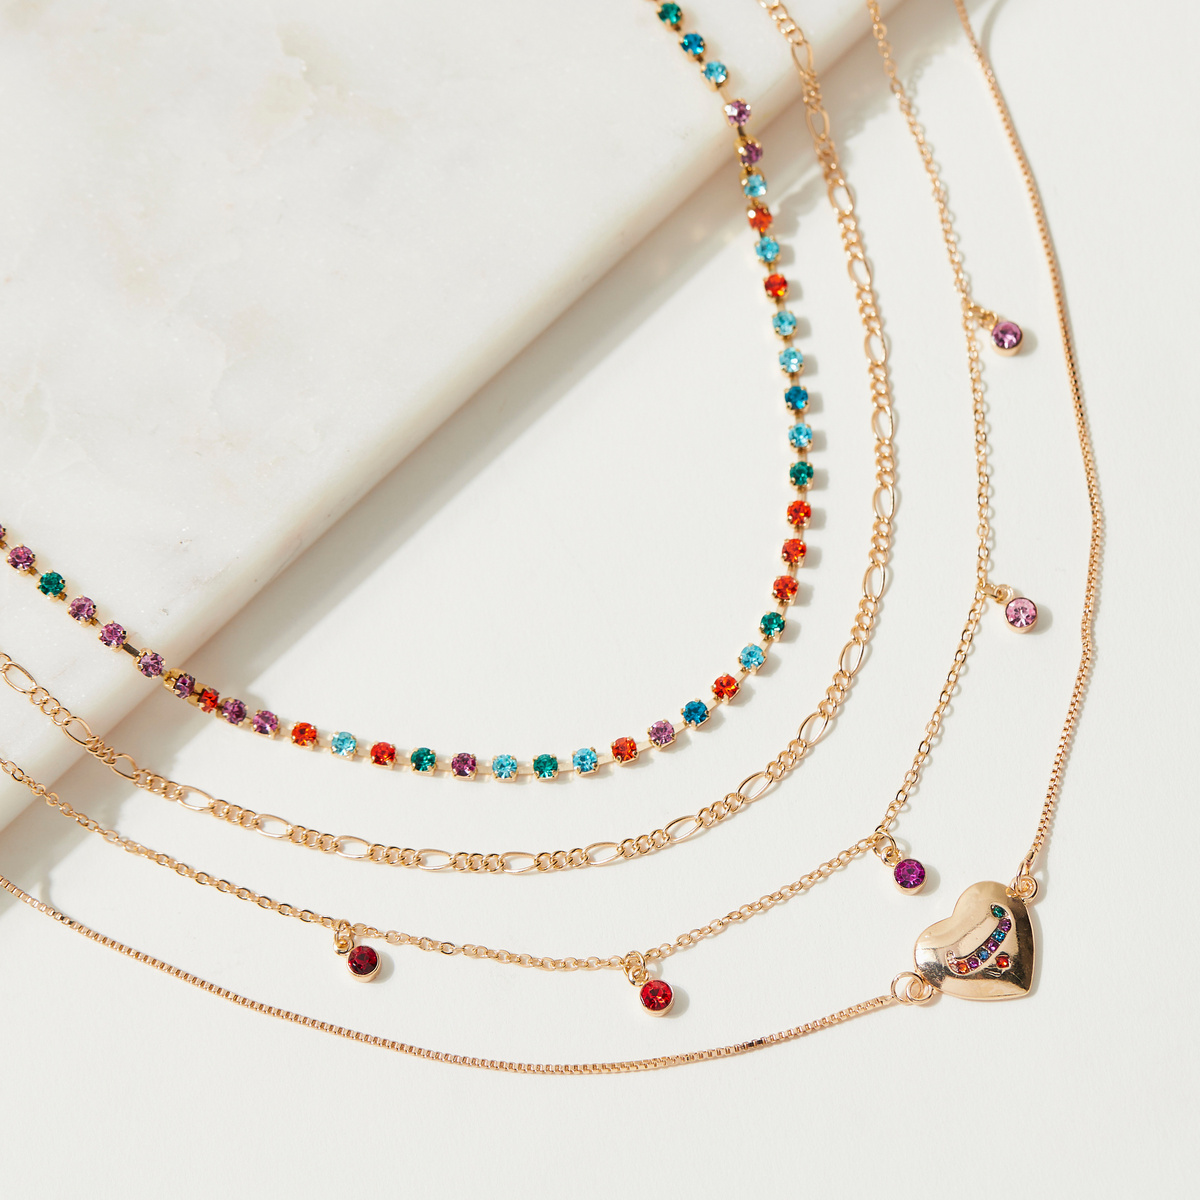 4-Layered Necklace with Arabic Alphabet Debossed Pendant